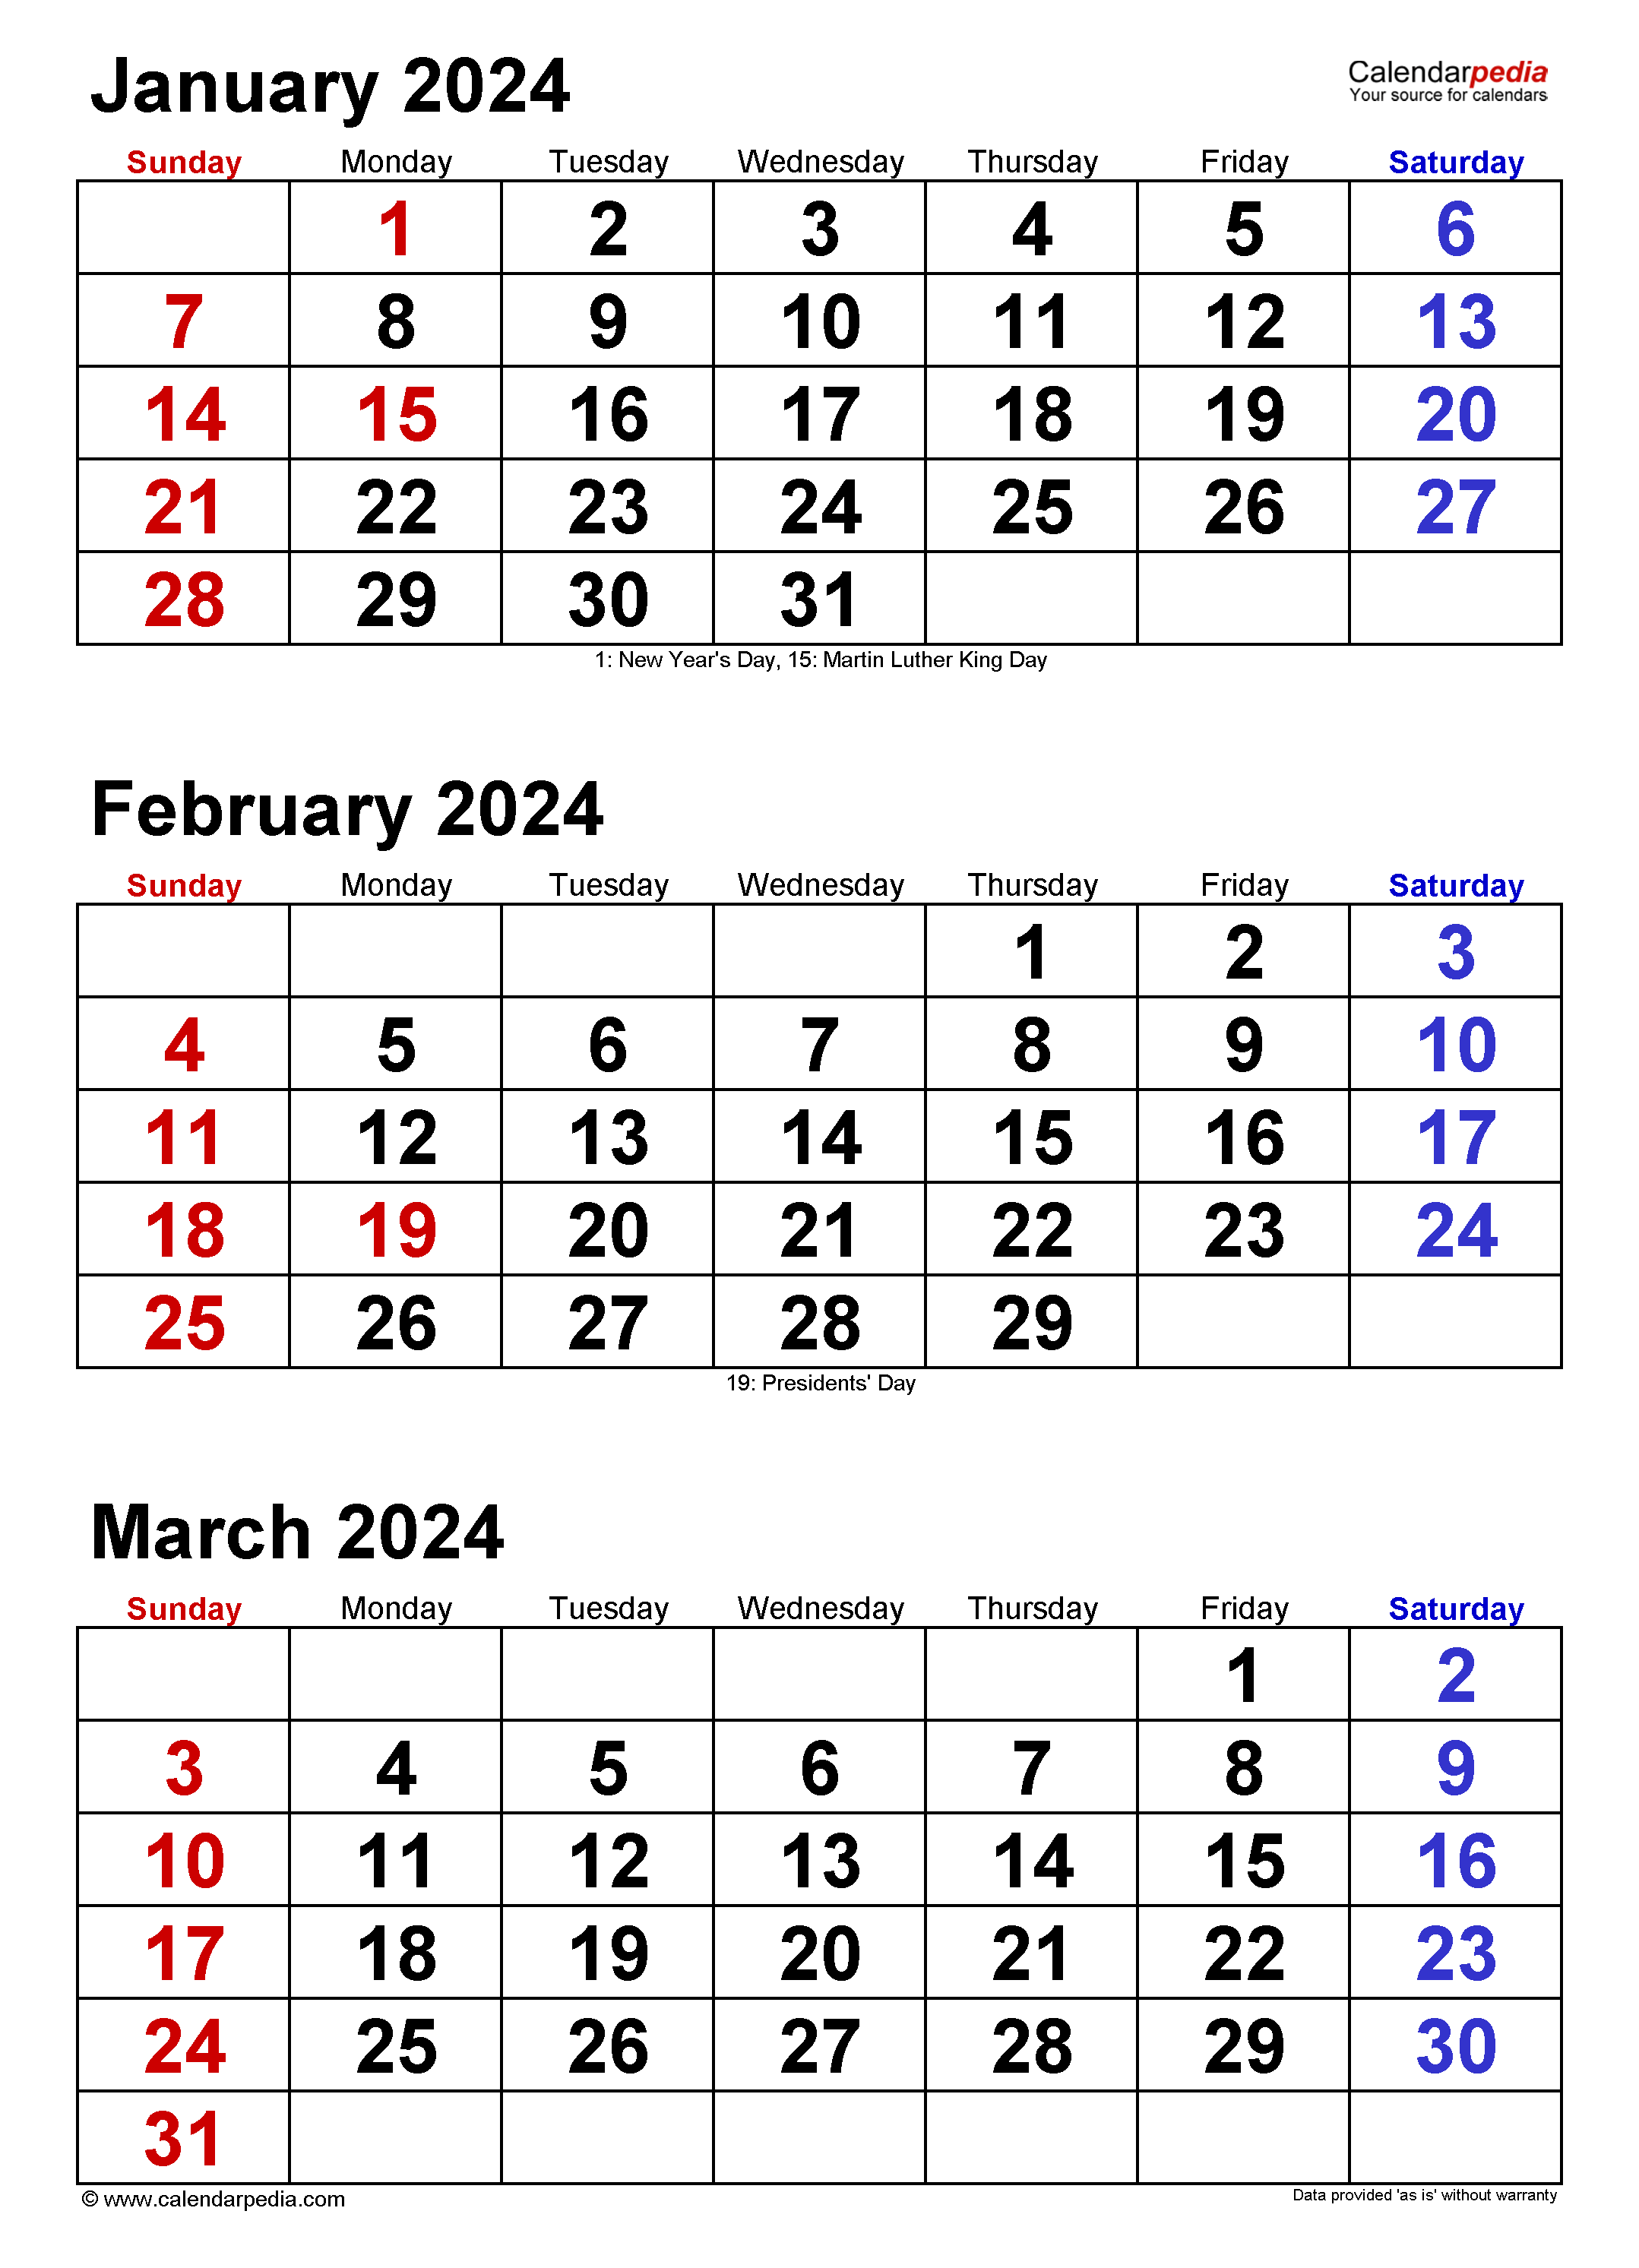 Quarterly Calendars 2024 - Free Printable Pdf Templates for 2024 Quarterly Calendar Free Printable